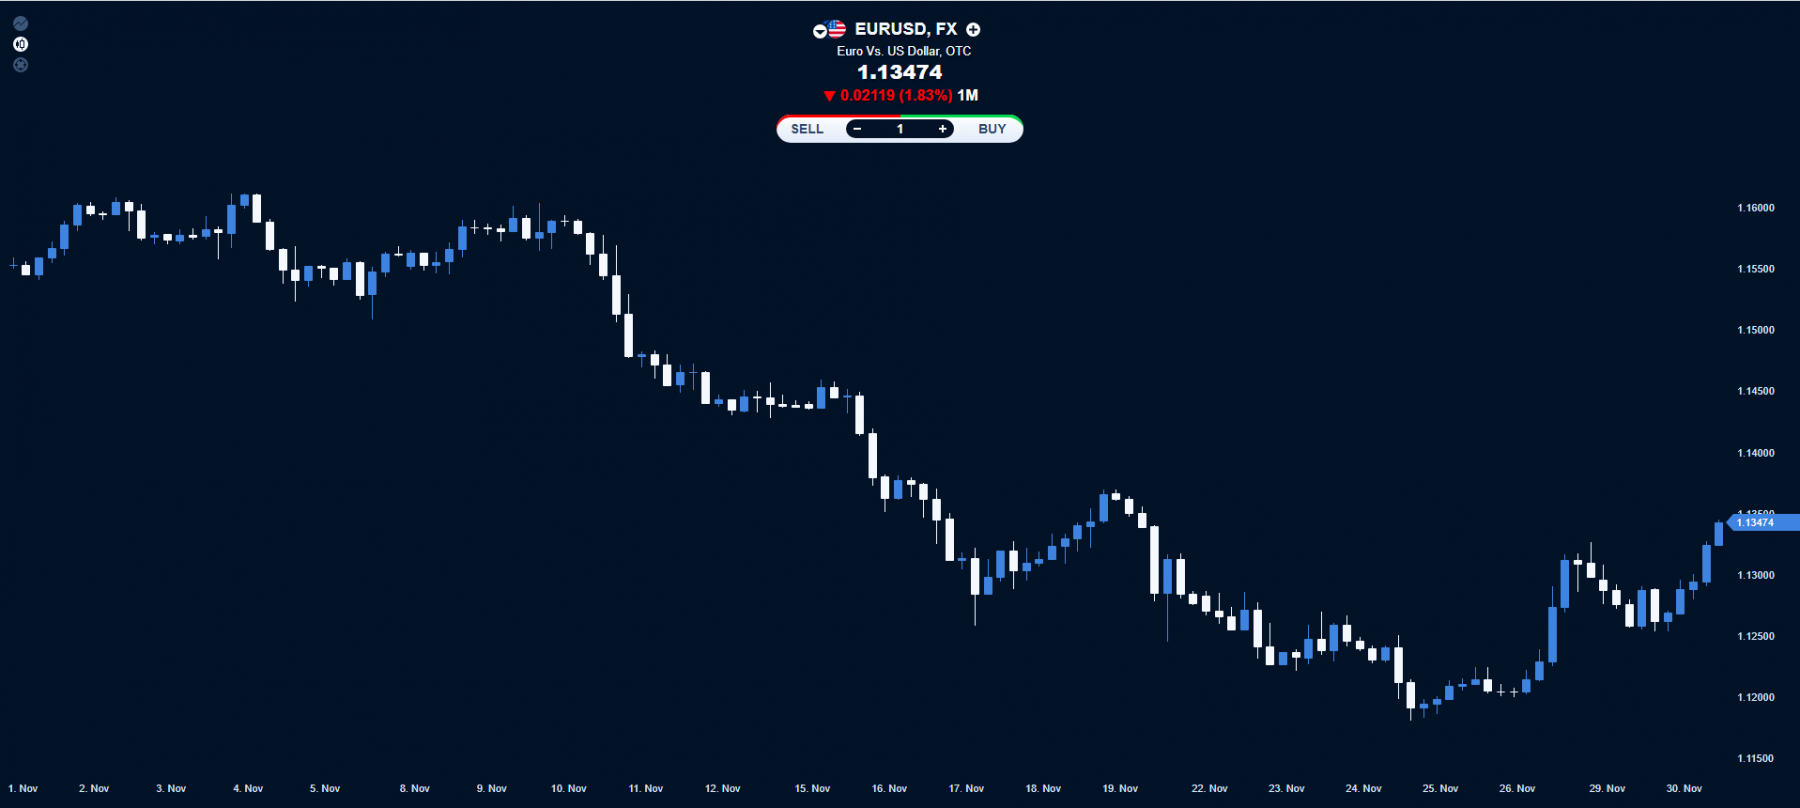 EUR/USD price chart.